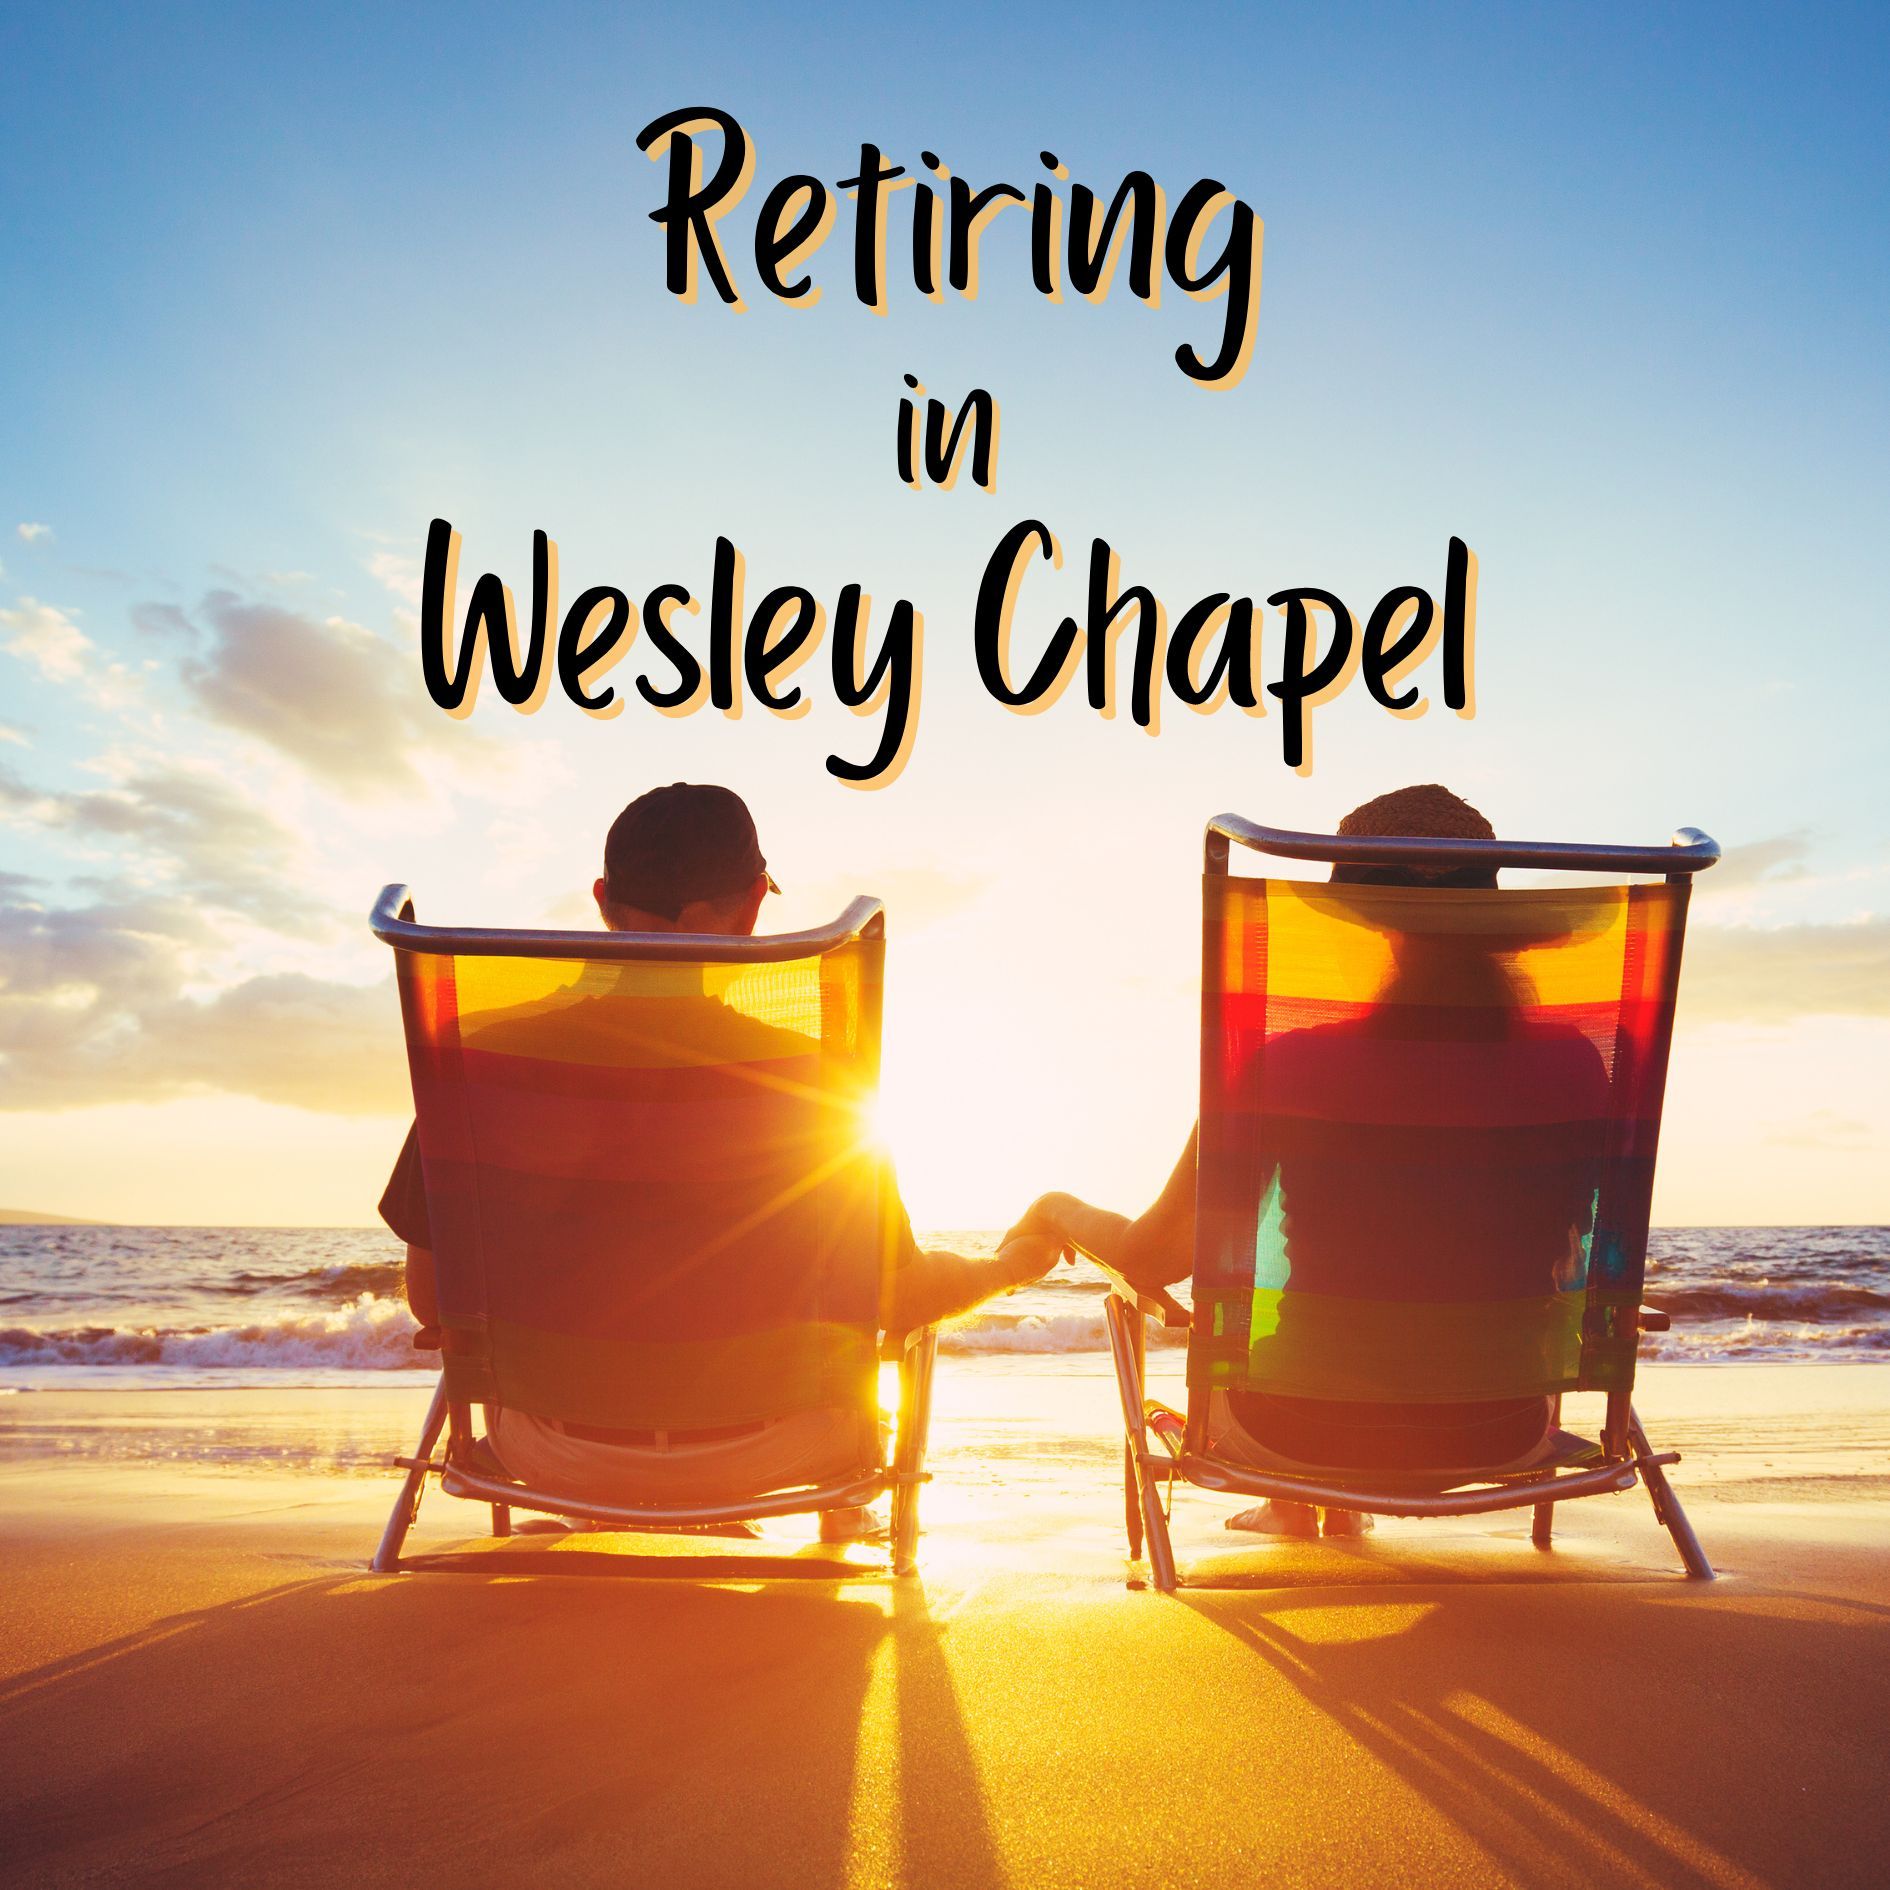 Retire in Wesley Chapel FL - Is Wesley Chapel A Good Place To Retire?